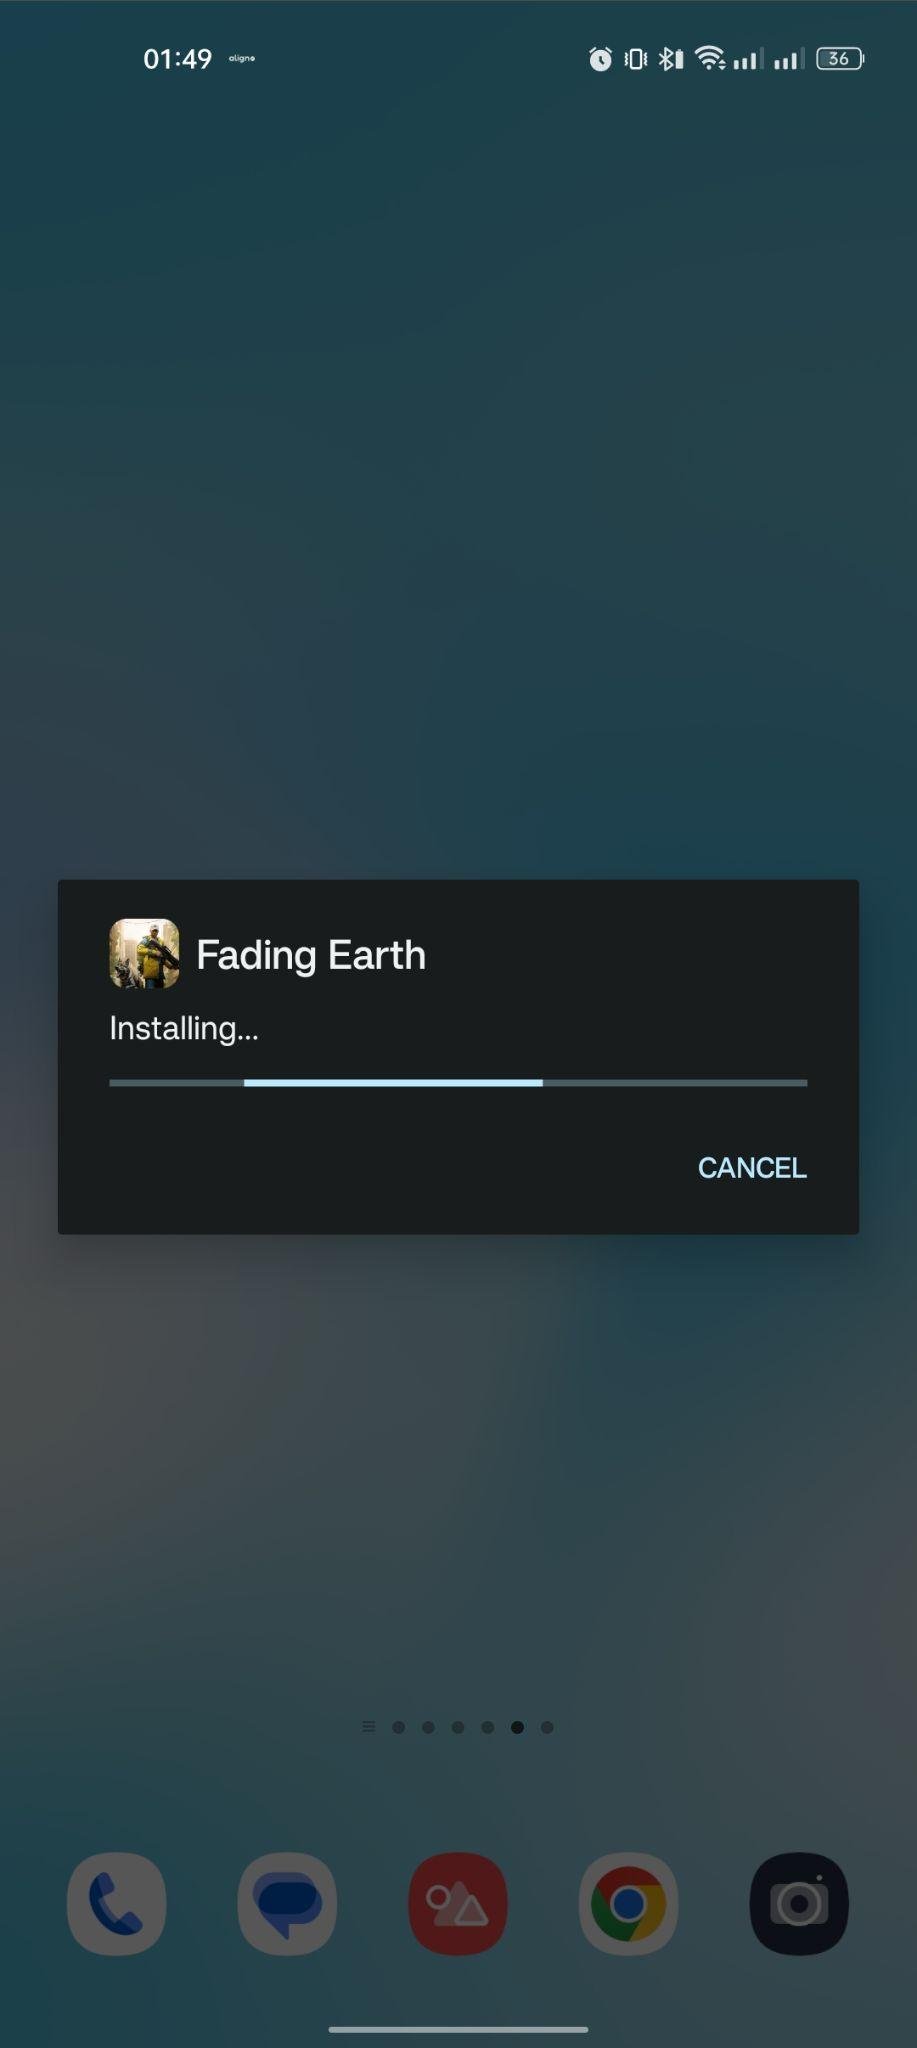 Fading Earth apk installing